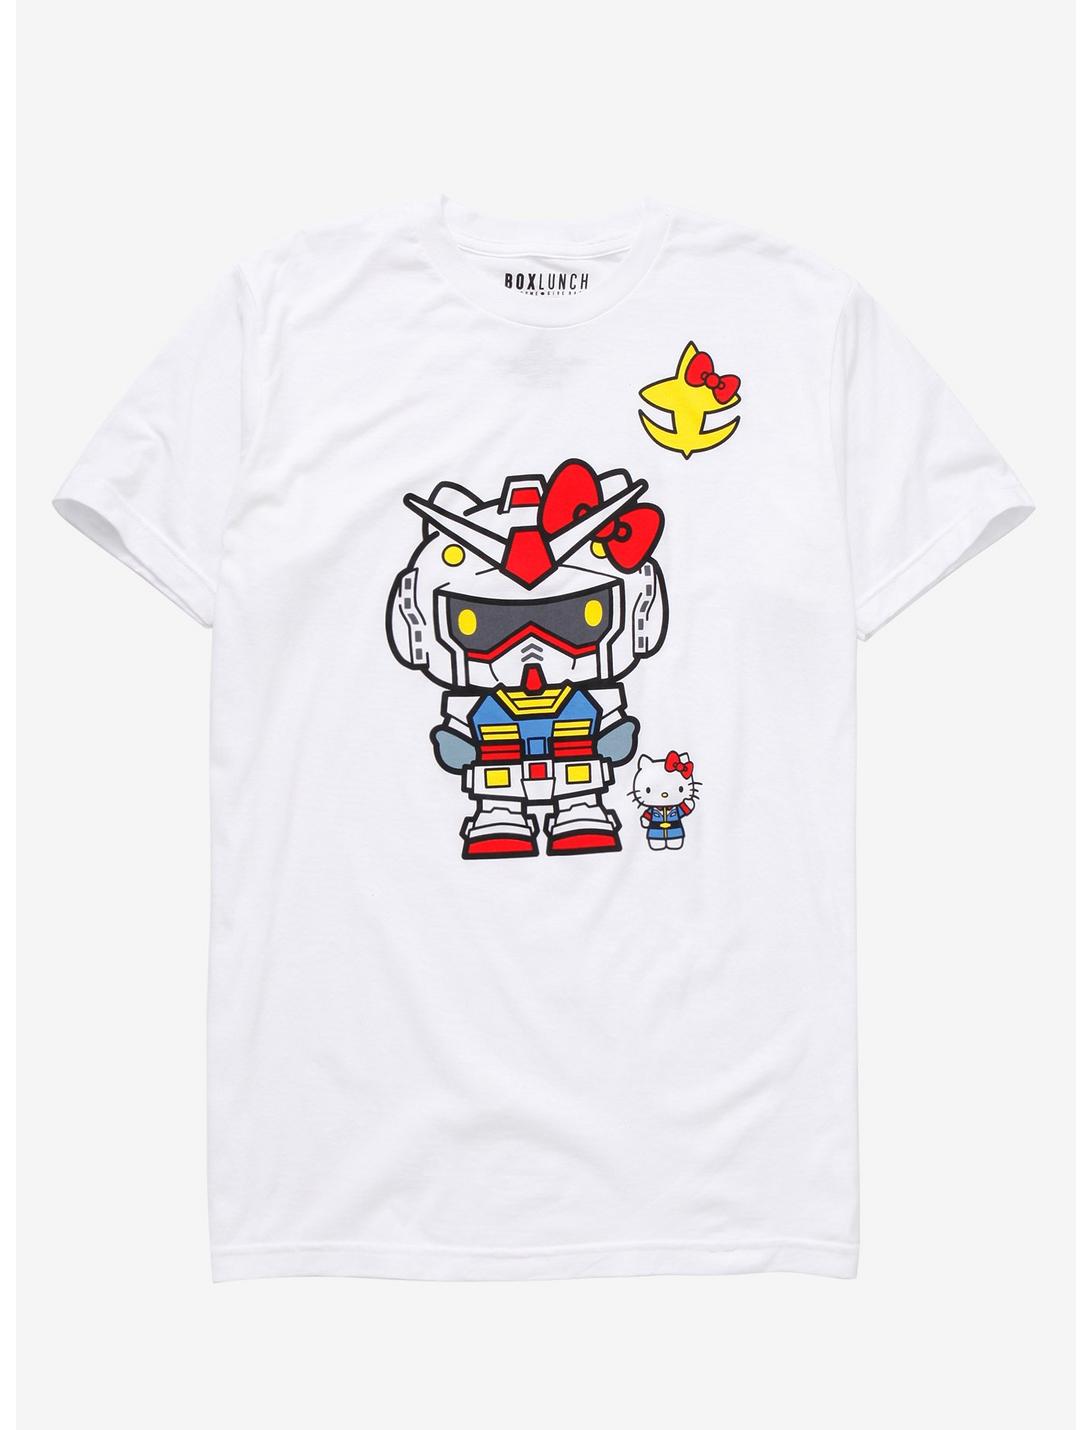 Gundam x Hello Kitty RX-78-2 Gundam T-Shirt - BoxLunch Exclusive, OFF WHITE, hi-res